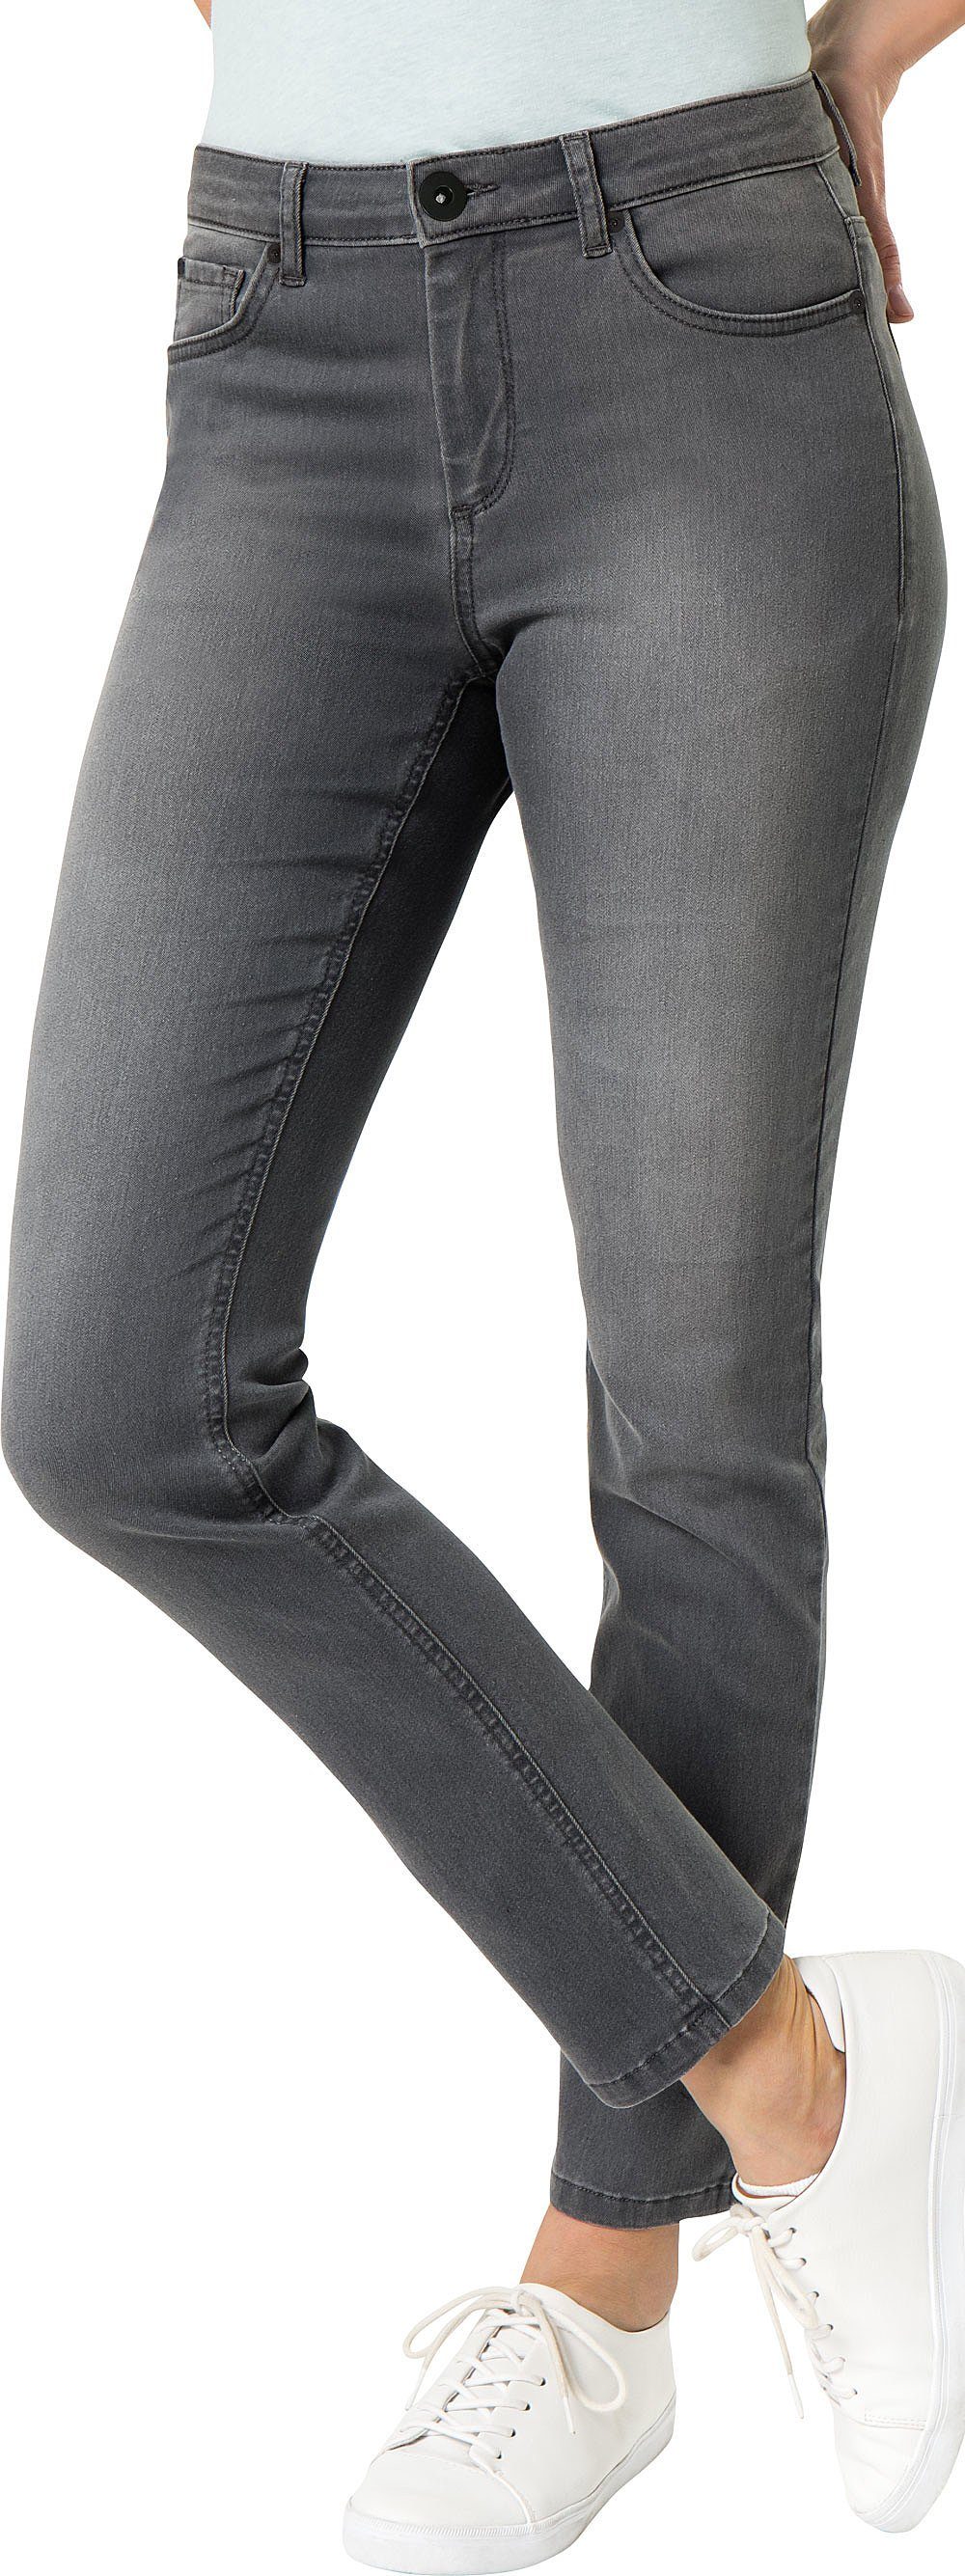 Emilia Parker Stretch-Hose ultrabequeme Jeans mit knackigem Sitz grau